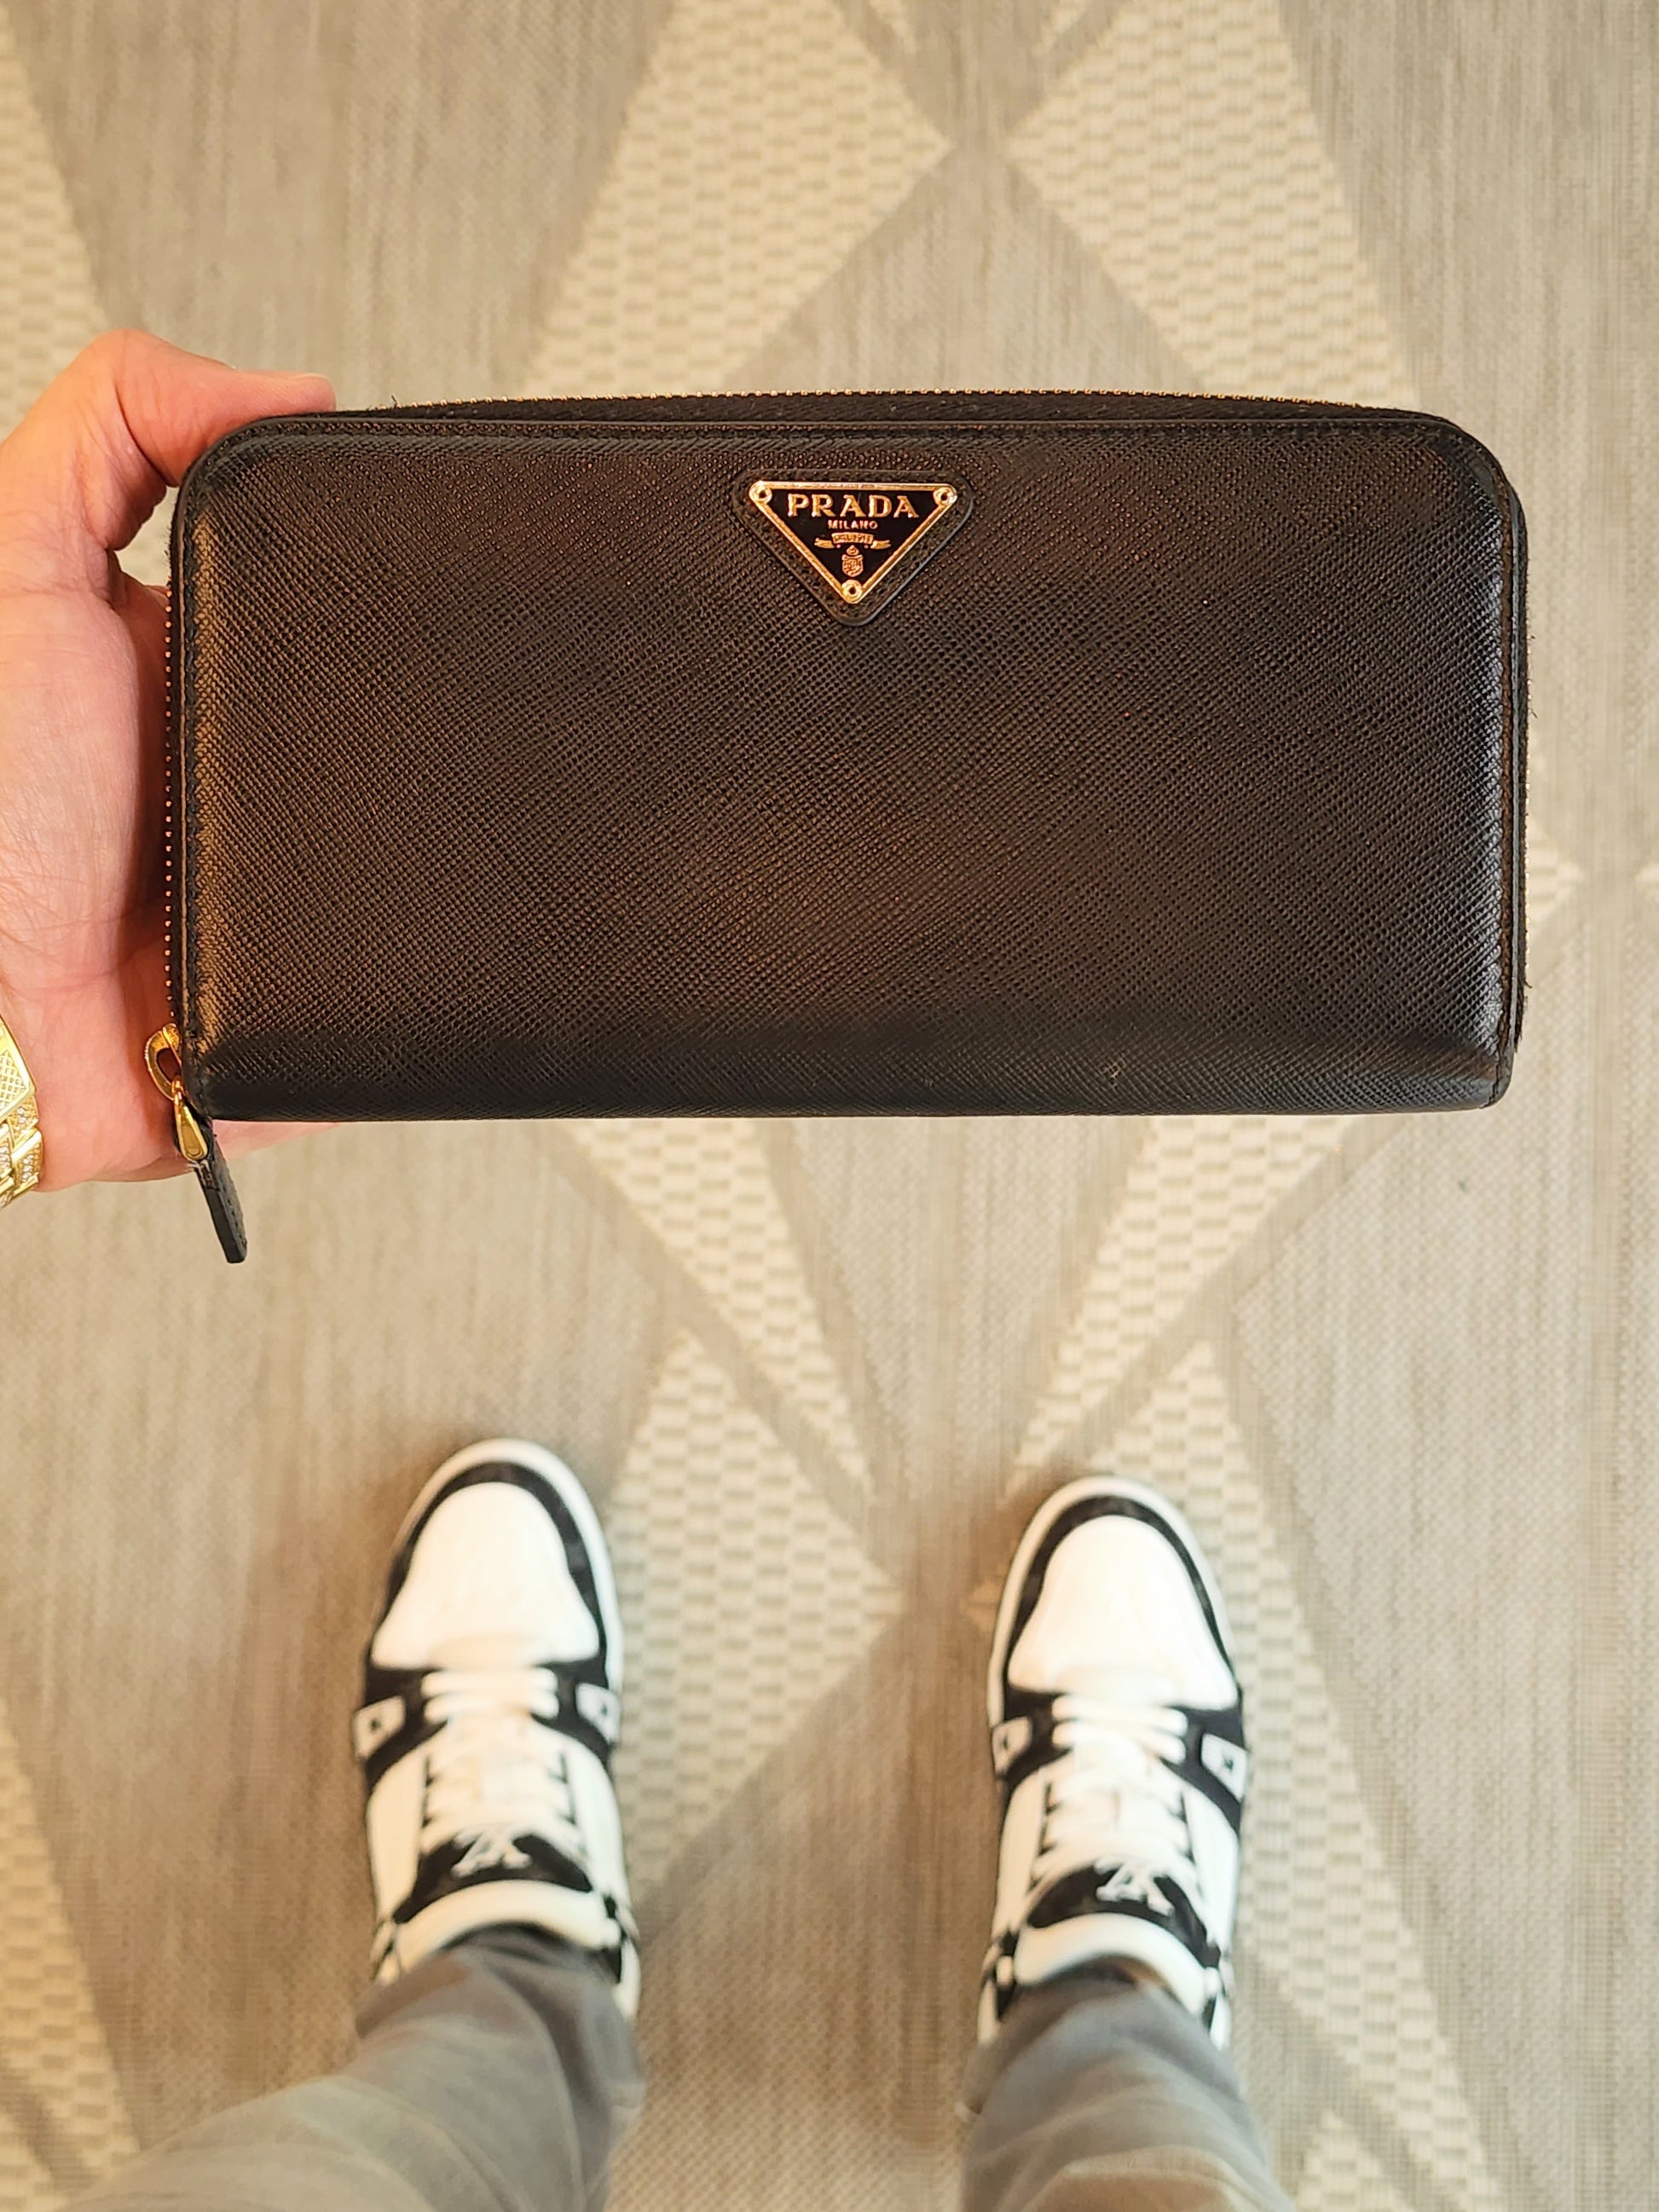 Prada Small Saffiano Leather Wallet, Women, Black  Leather wallet, Luxury  wallet, Prada bag saffiano